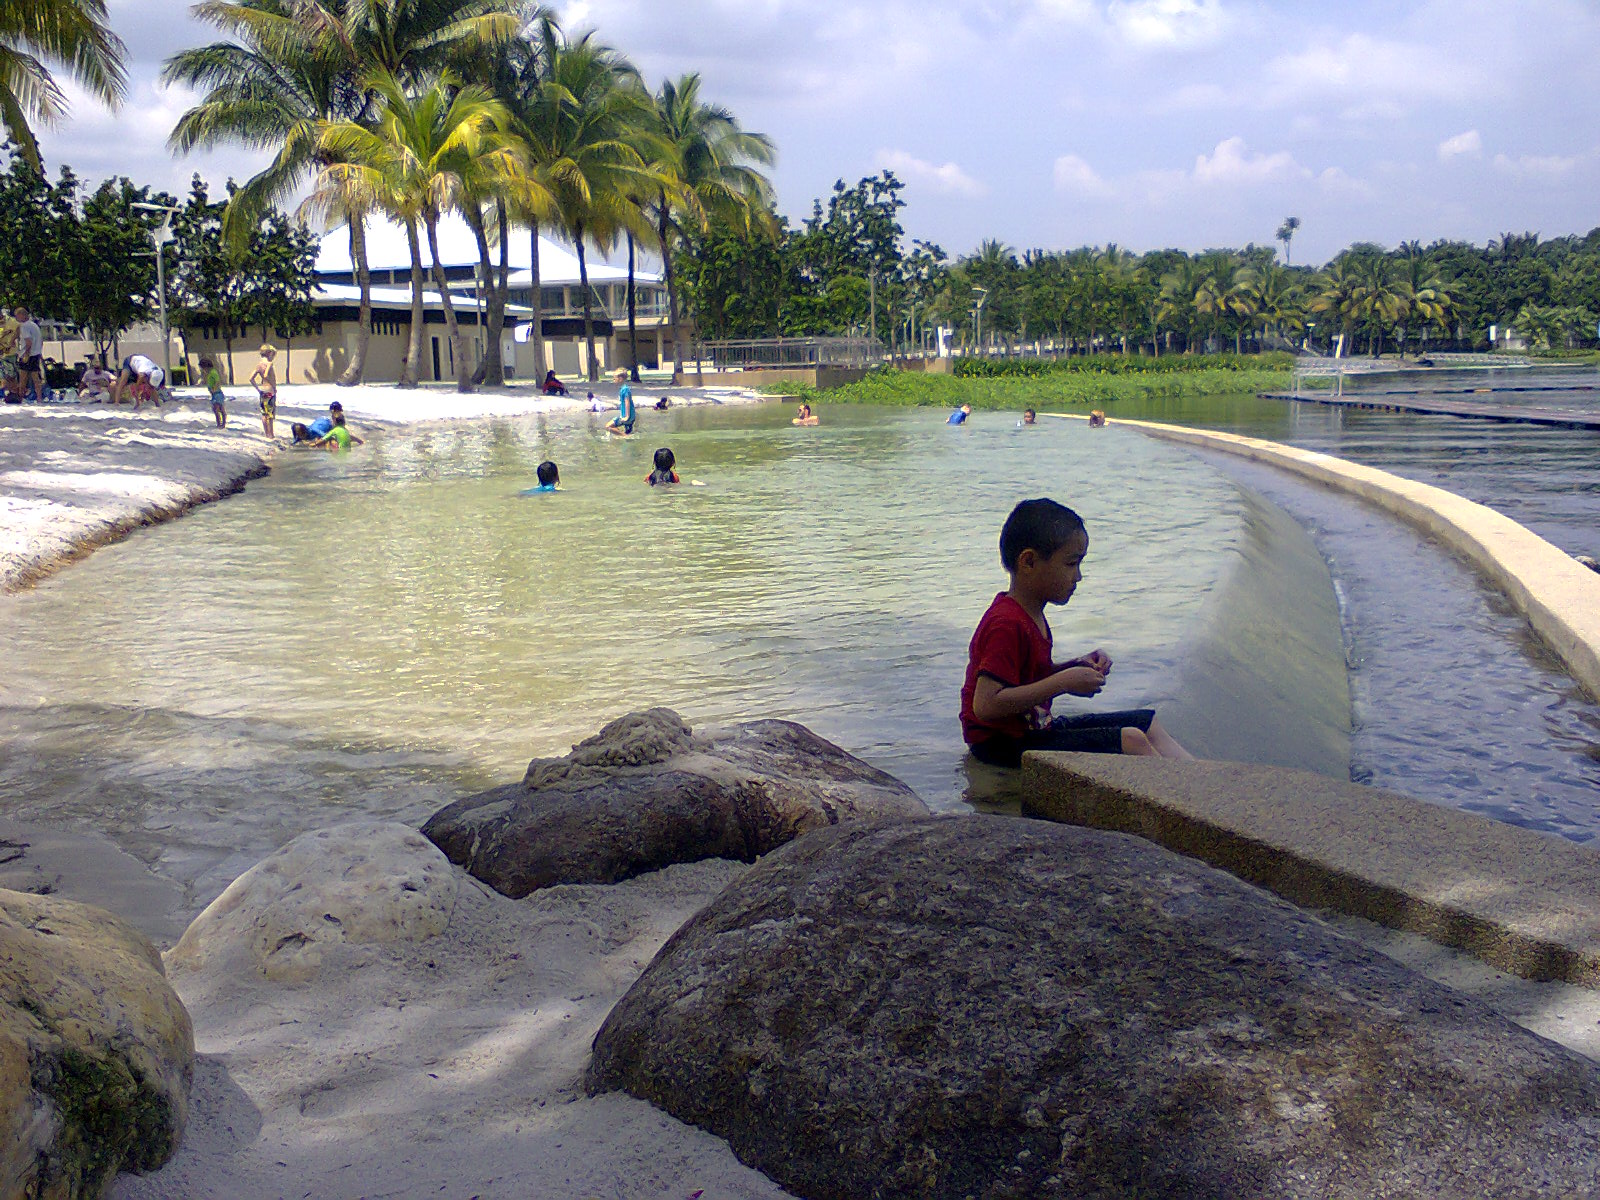 Reenor_Inilah Duniaku: Pusat Rekreasi Air, Pantai Pullman Putrajaya